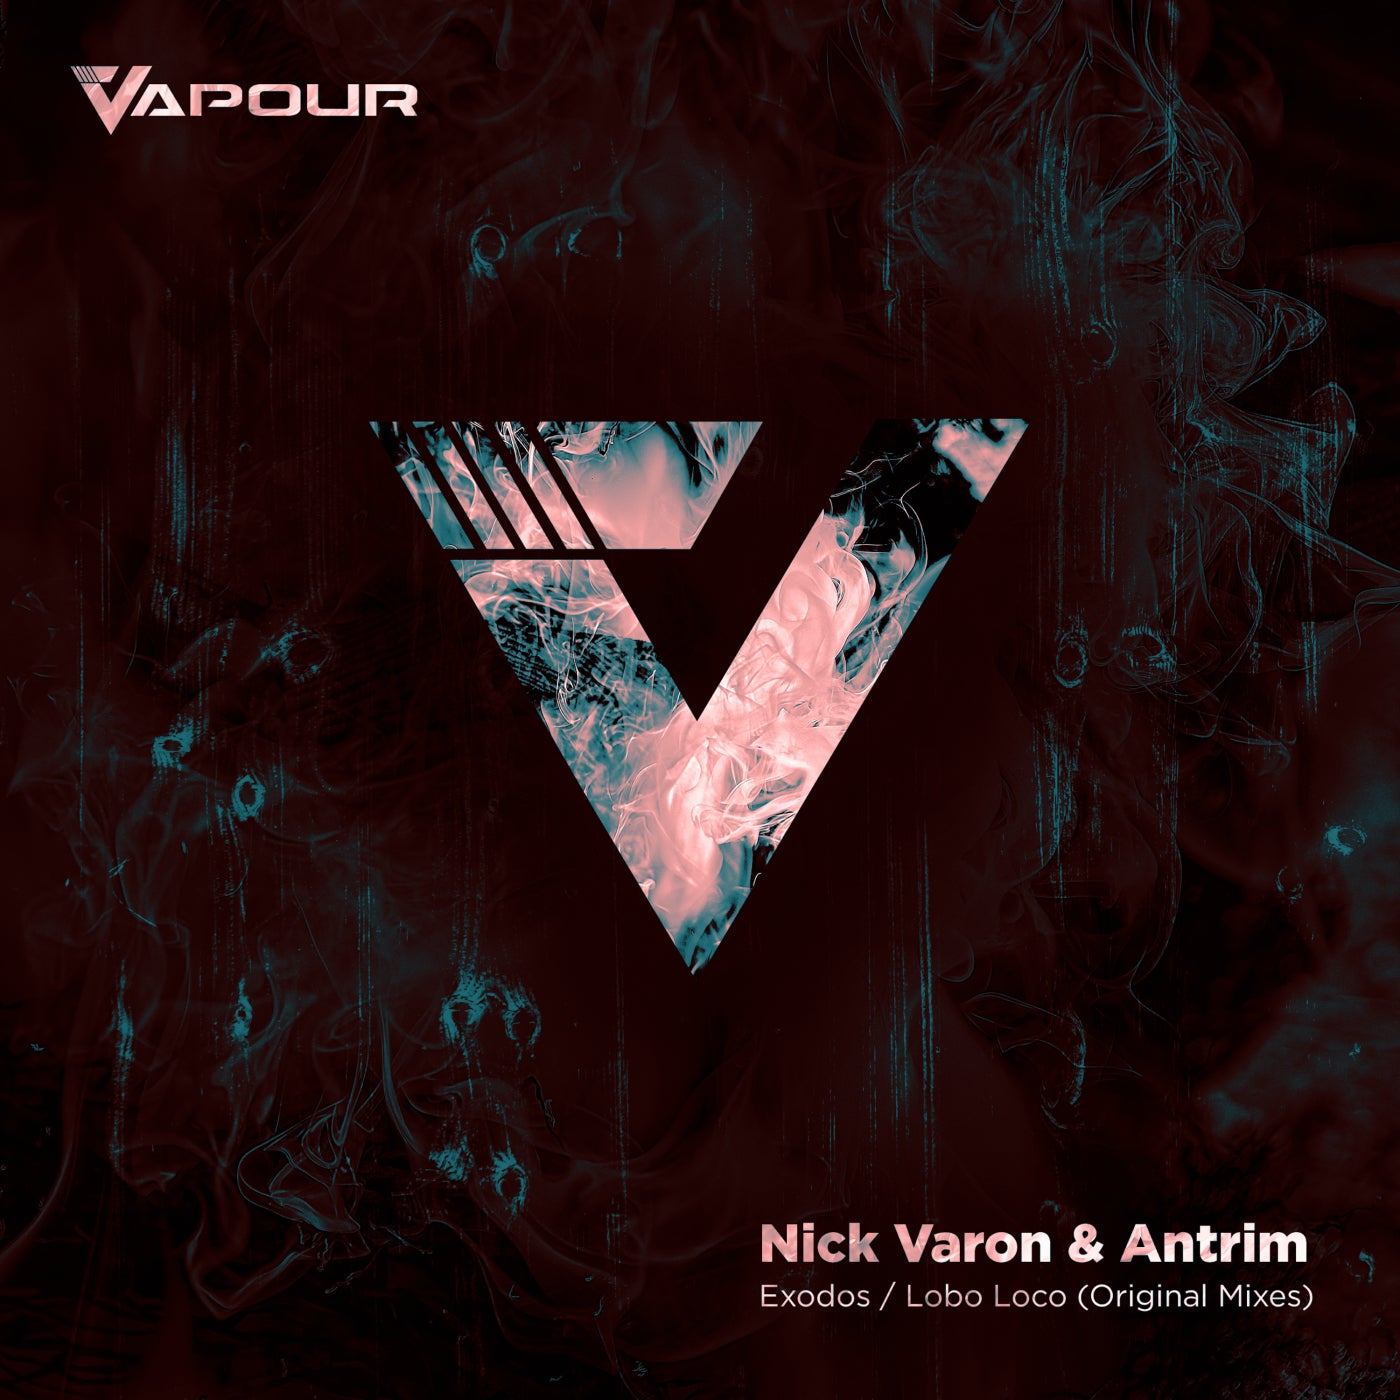 image cover: Antrim, Nick Varon - Exodos / Lobo Loco / VR148